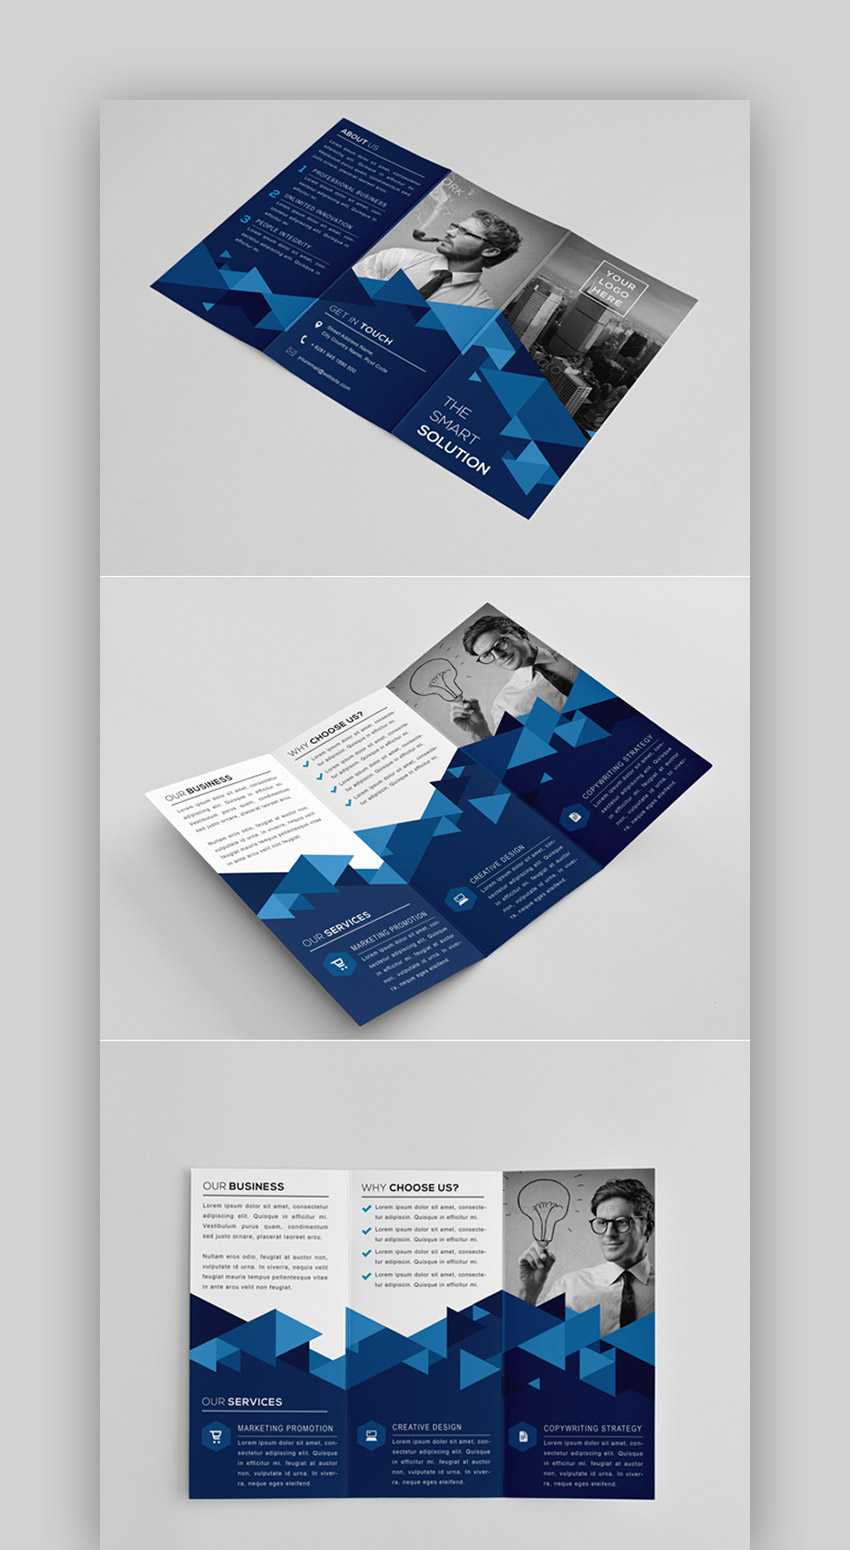 30 Best Indesign Brochure Templates – Creative Business For Adobe Indesign Brochure Templates